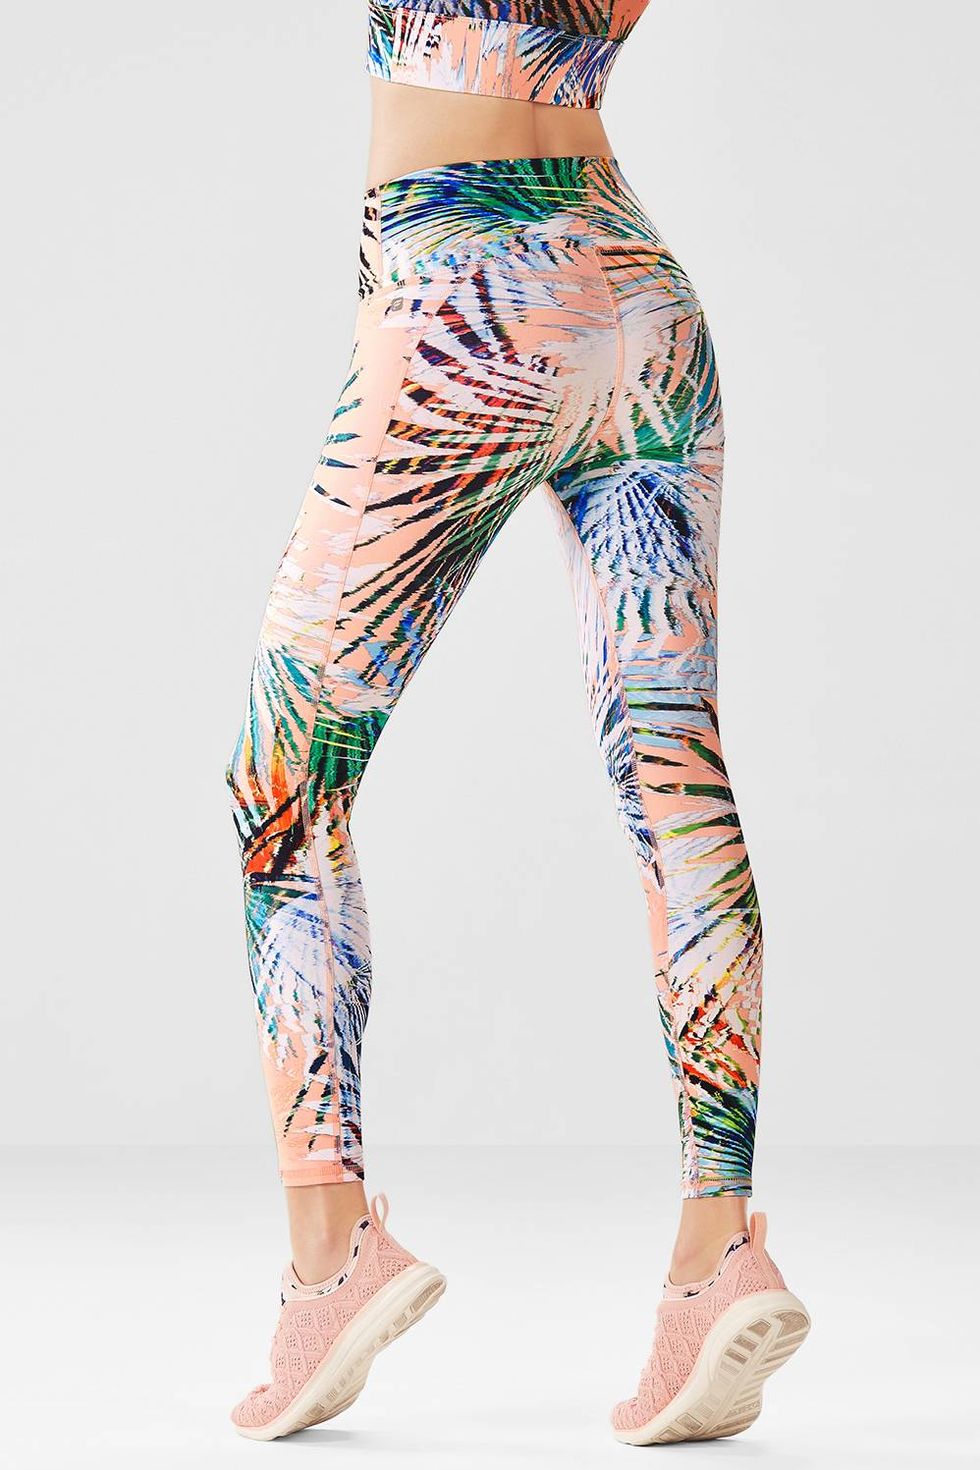 CALIA by Carrie Underwood Side Stripe Athletic Leggings for Women